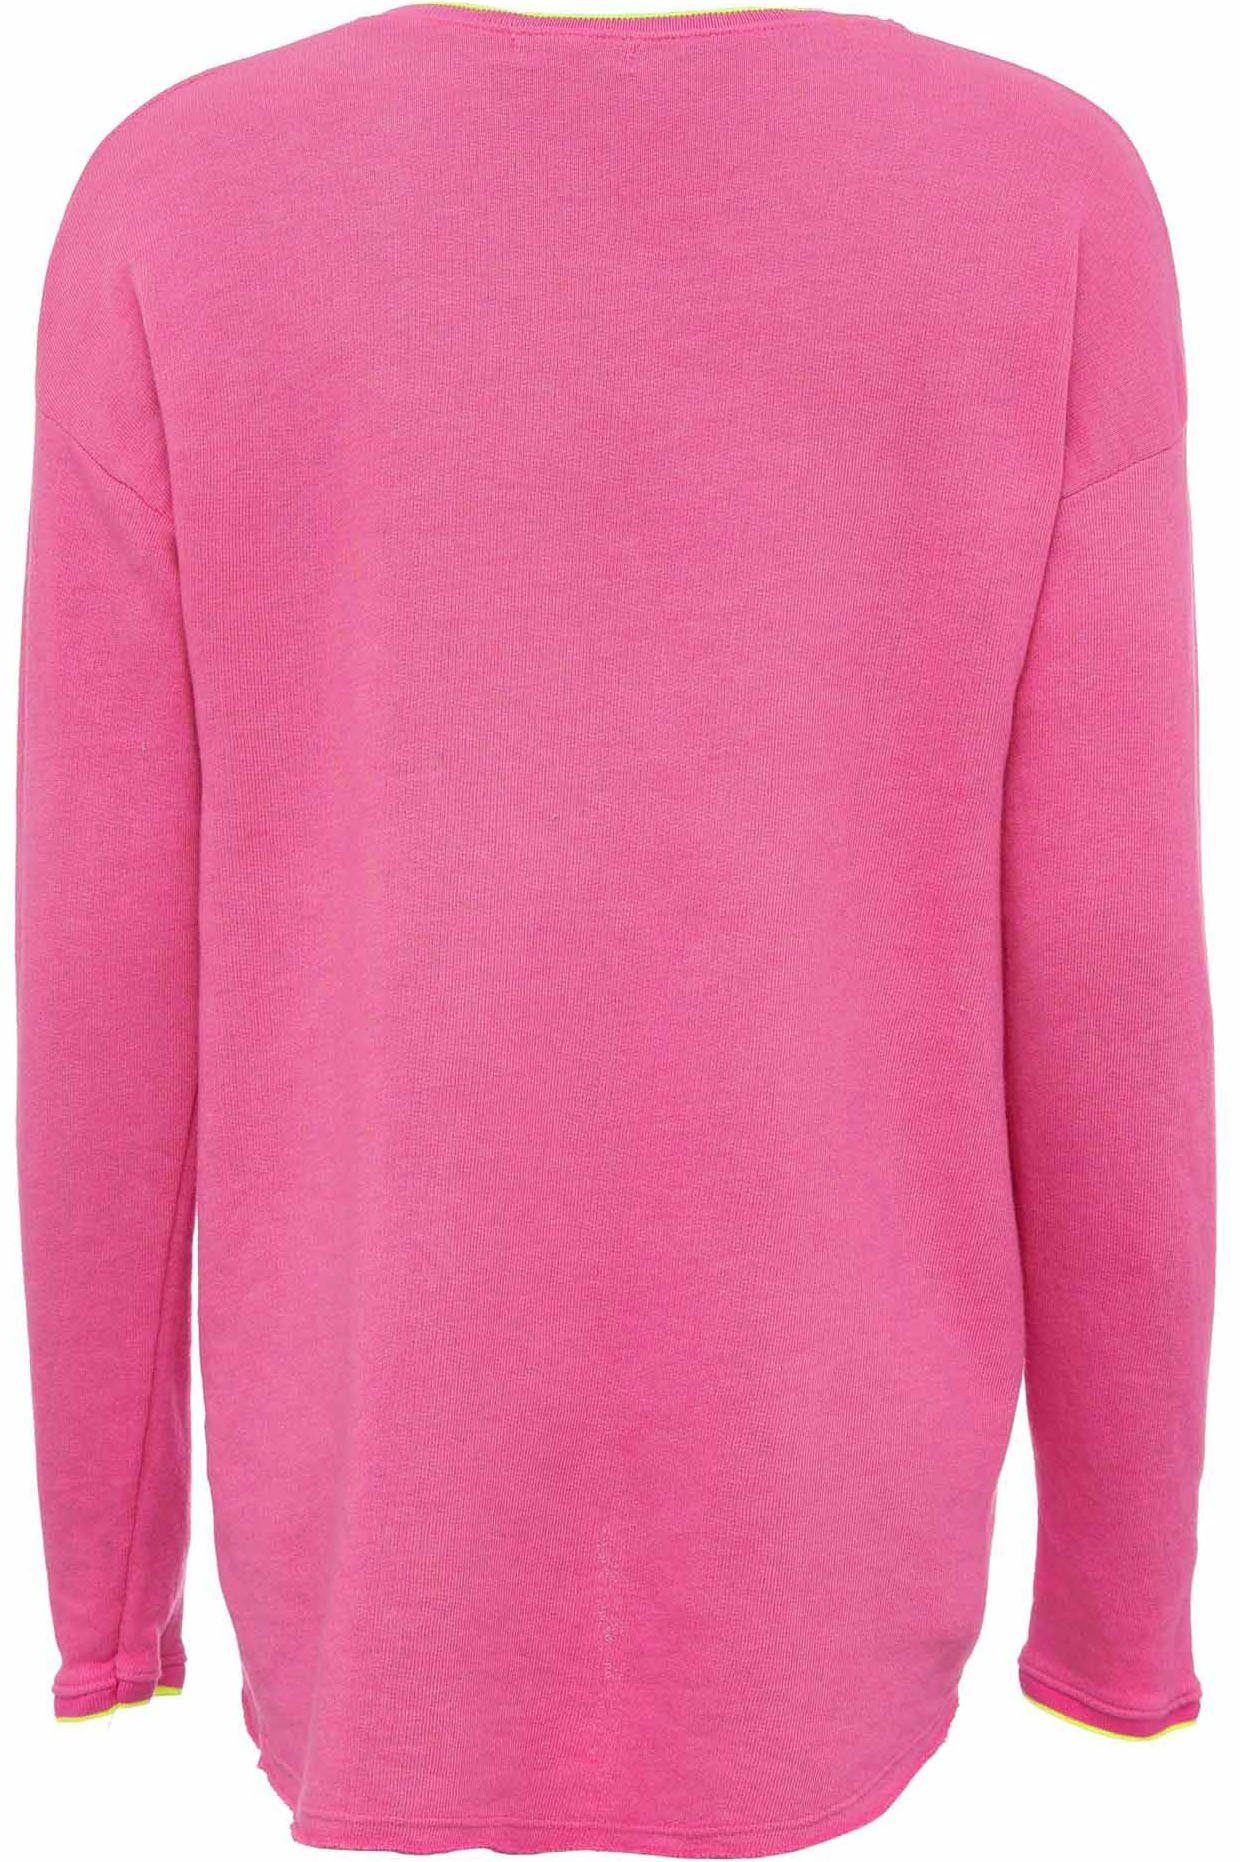 Kontrastnaht mit Zwillingsherz Sweatshirt pink V-Ausschnitt